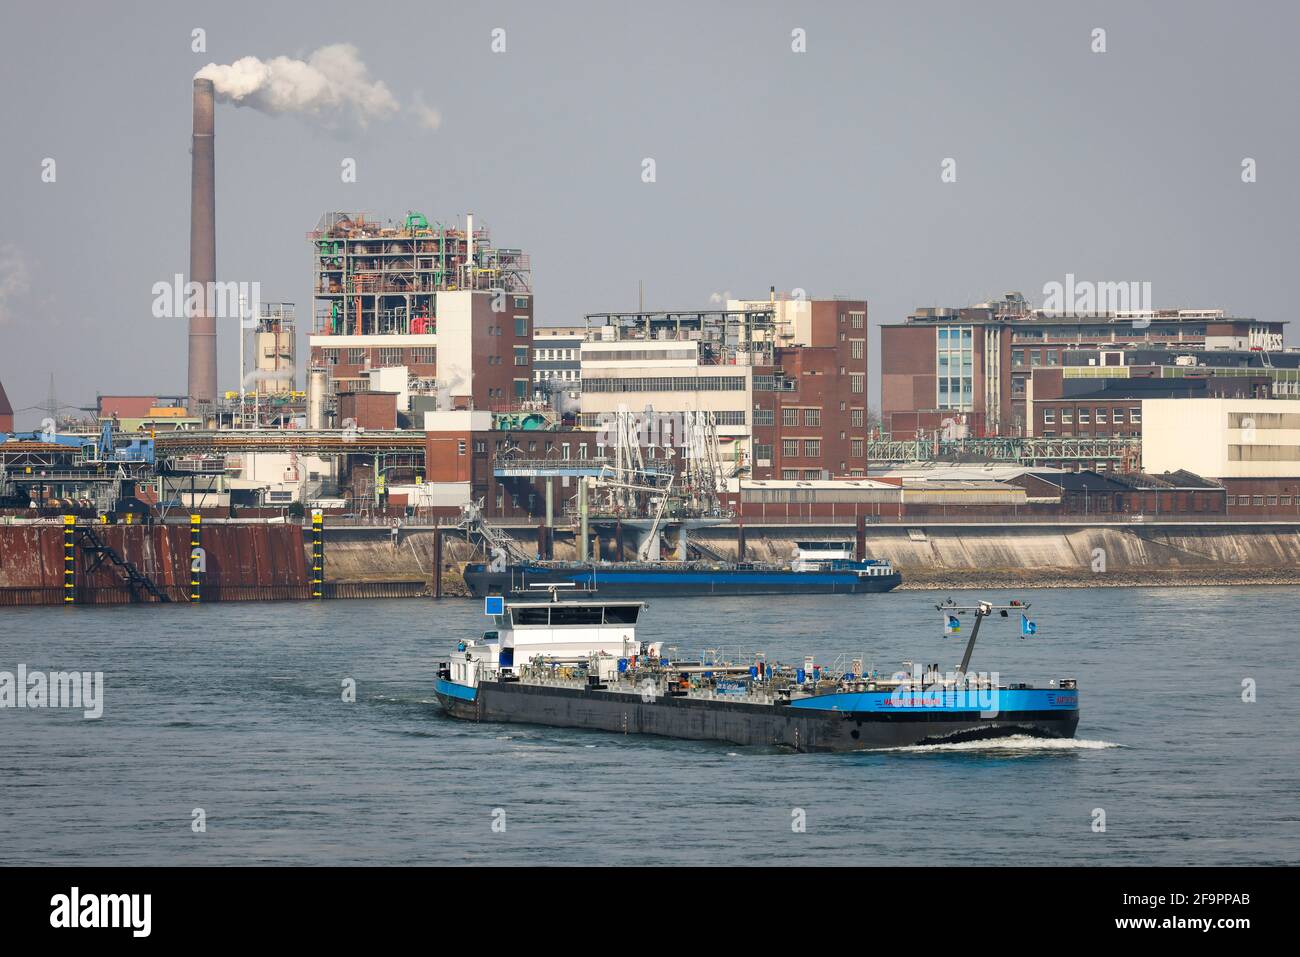 03.03.2021, Krefeld, North Rhine-Westphalia, Germany - Tanker sailing on the Rhine past the chemical plant Chempark Krefeld Uerdingen at the Rhine por Stock Photo